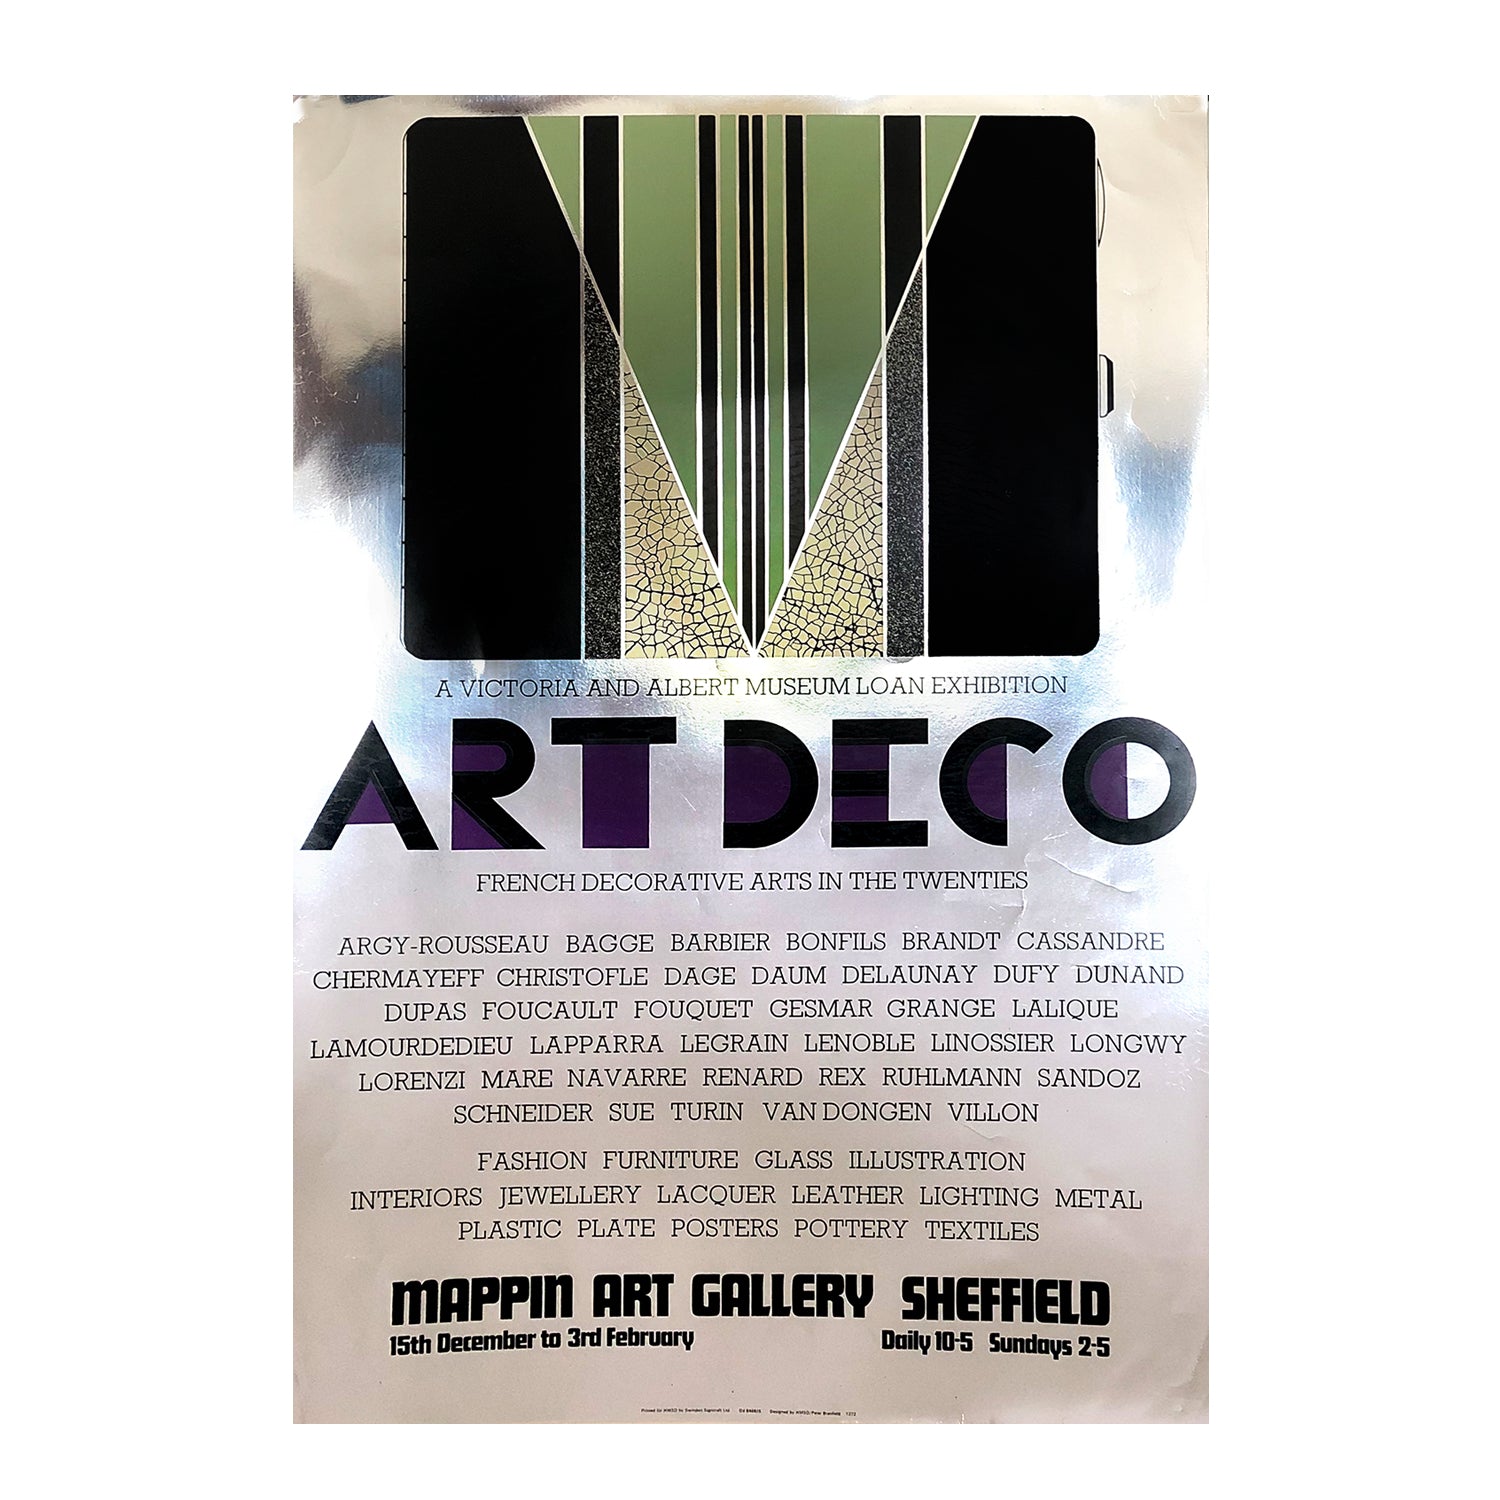 Original poster Art Deco - French Decorative Arts in the 1920s. Exhibition